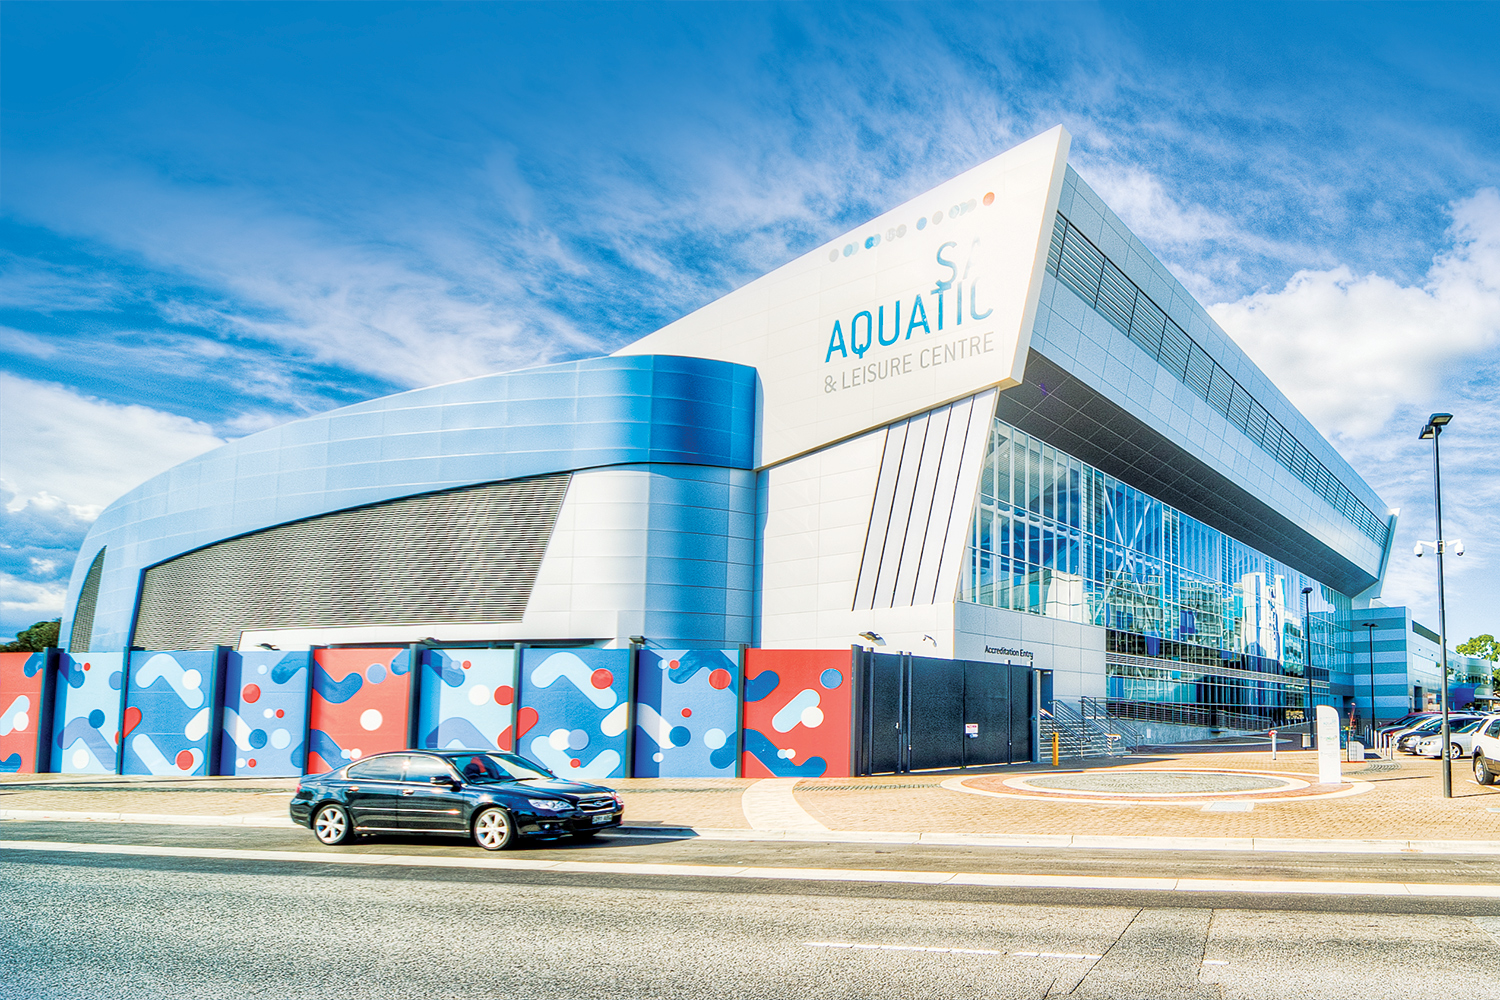 The South Australia Aquatic and Leisure Centre.